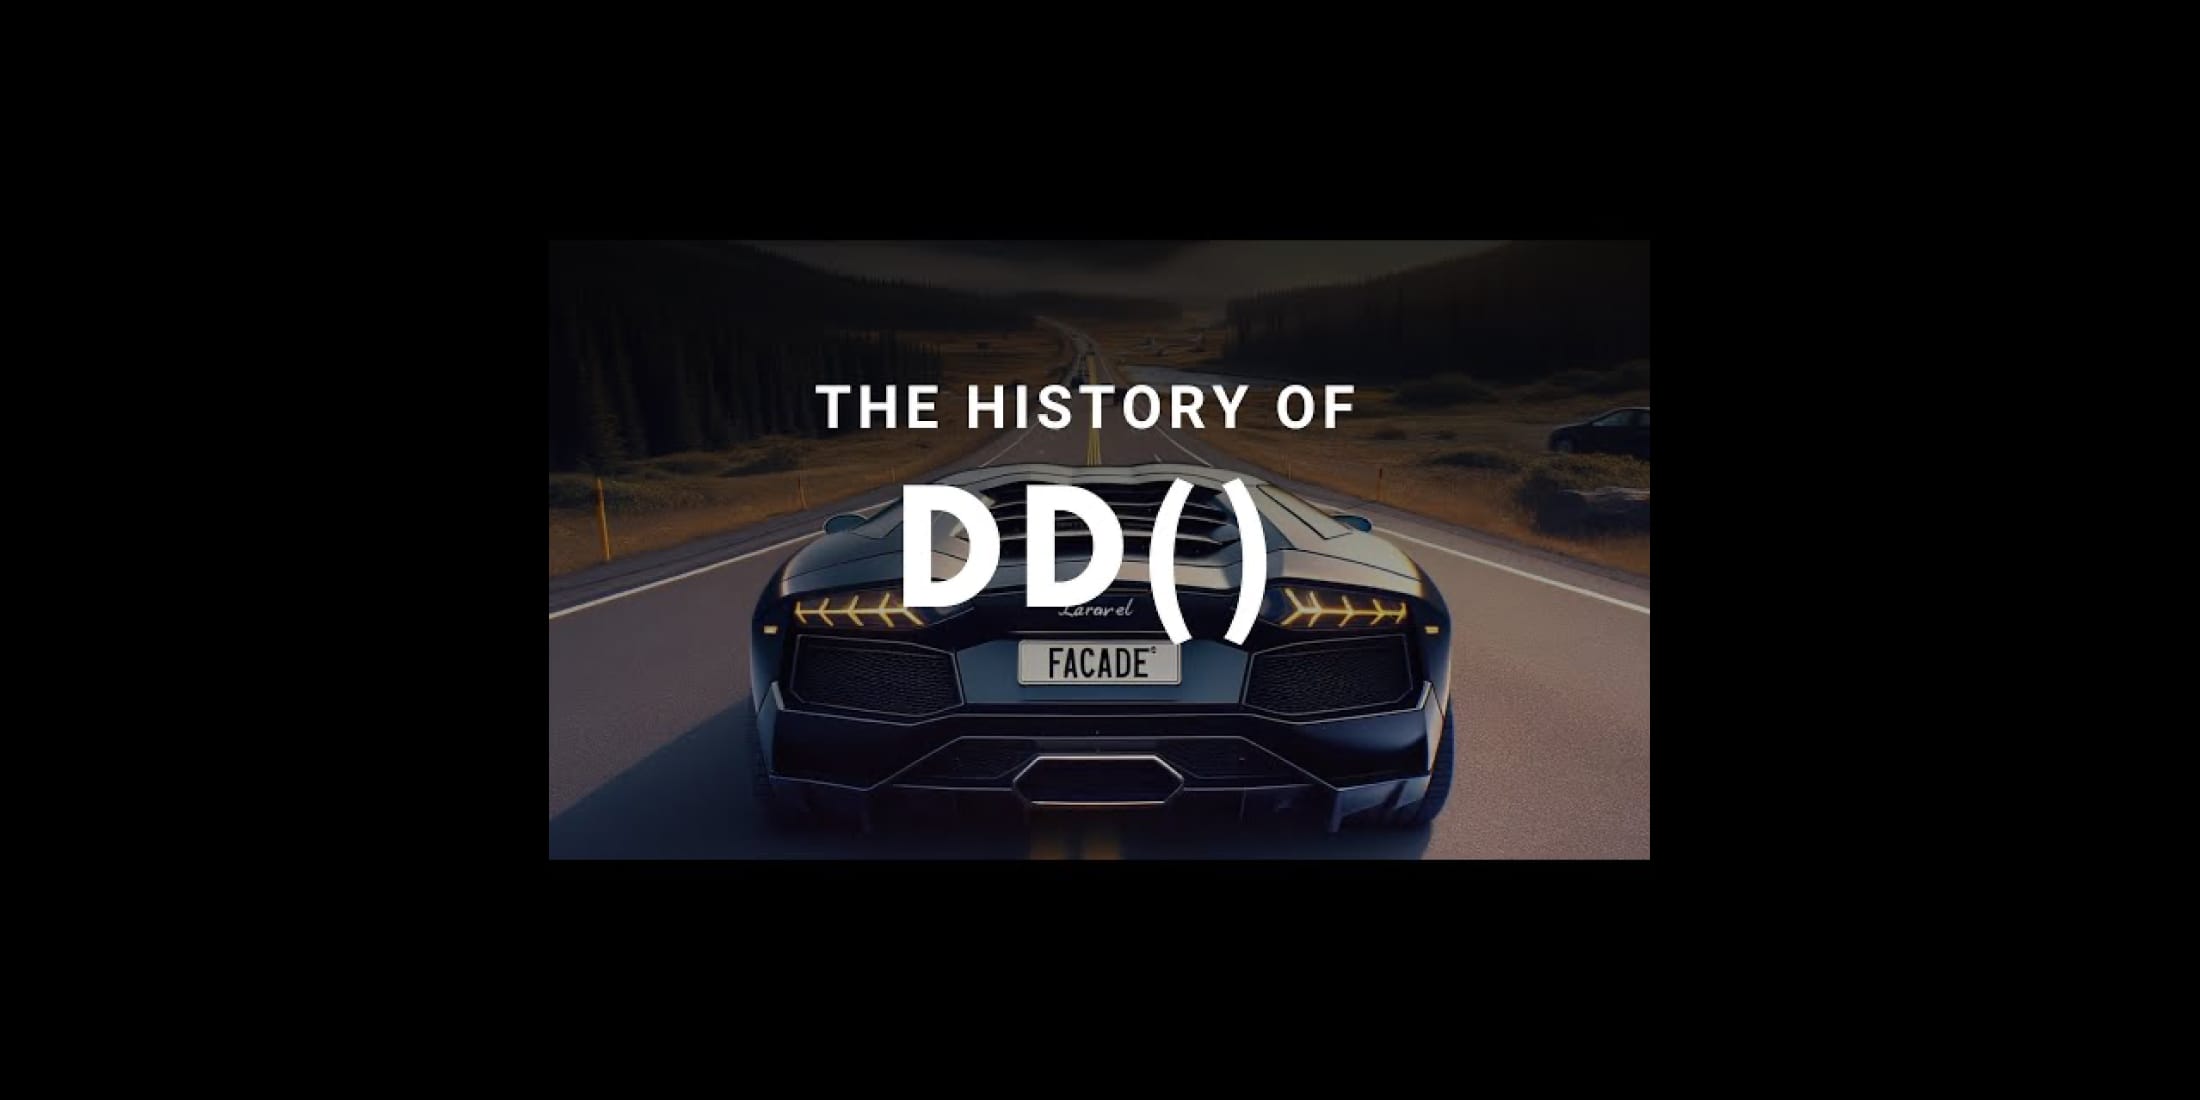 The history of Laravel's dd function